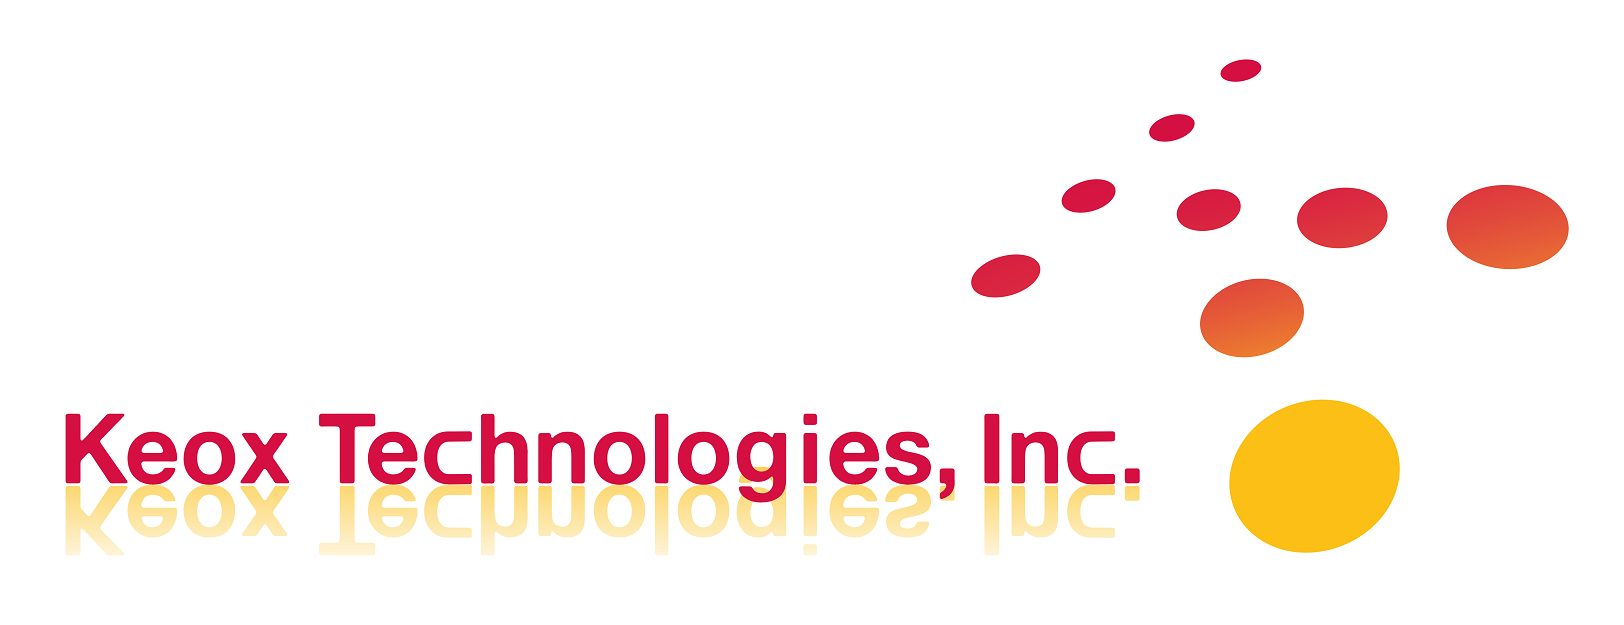 Keox Technologies, Inc.